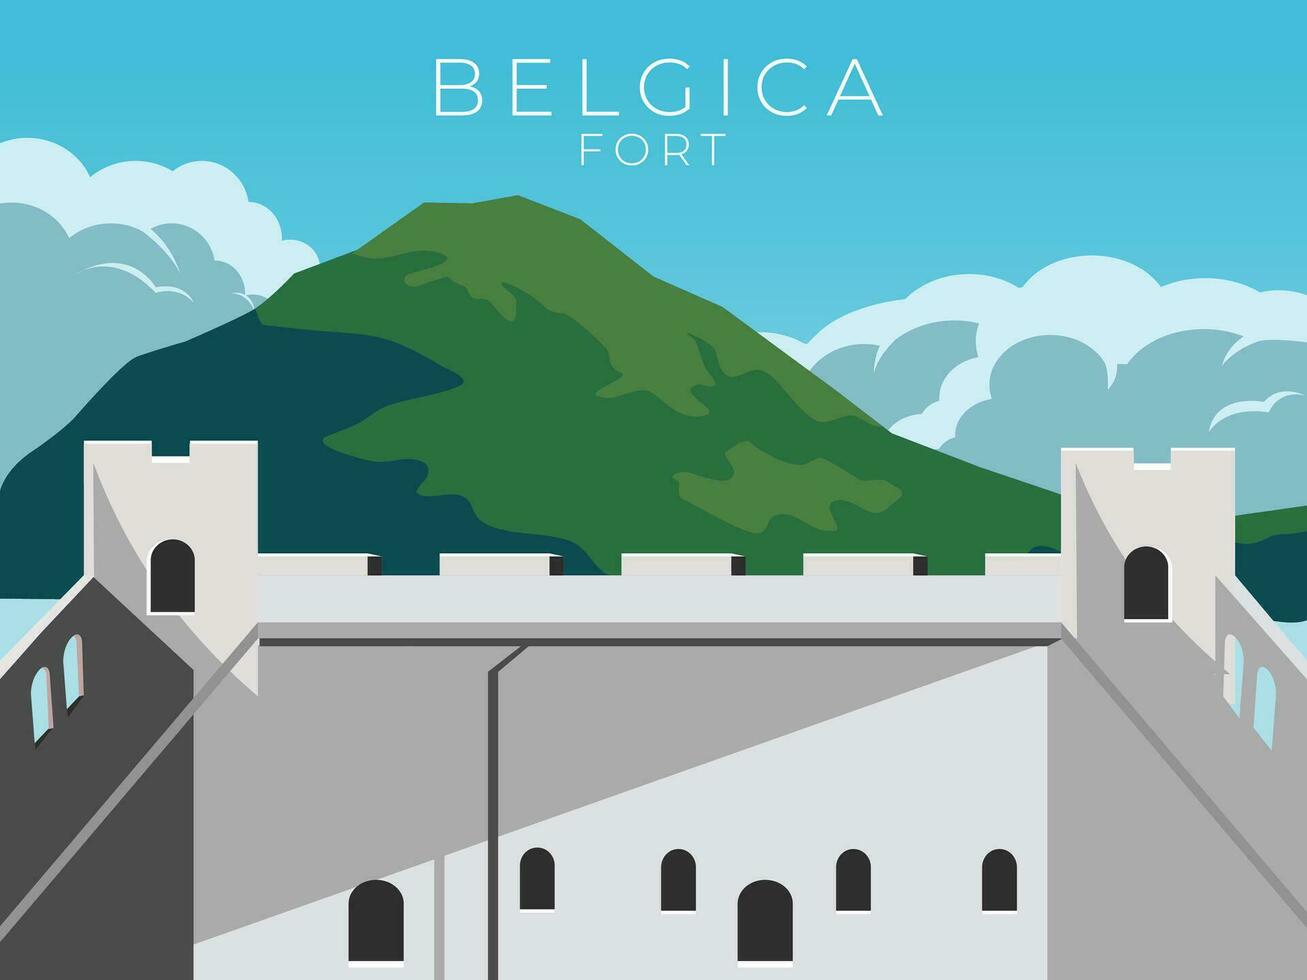 belgica fort Maluku indonesien vektor